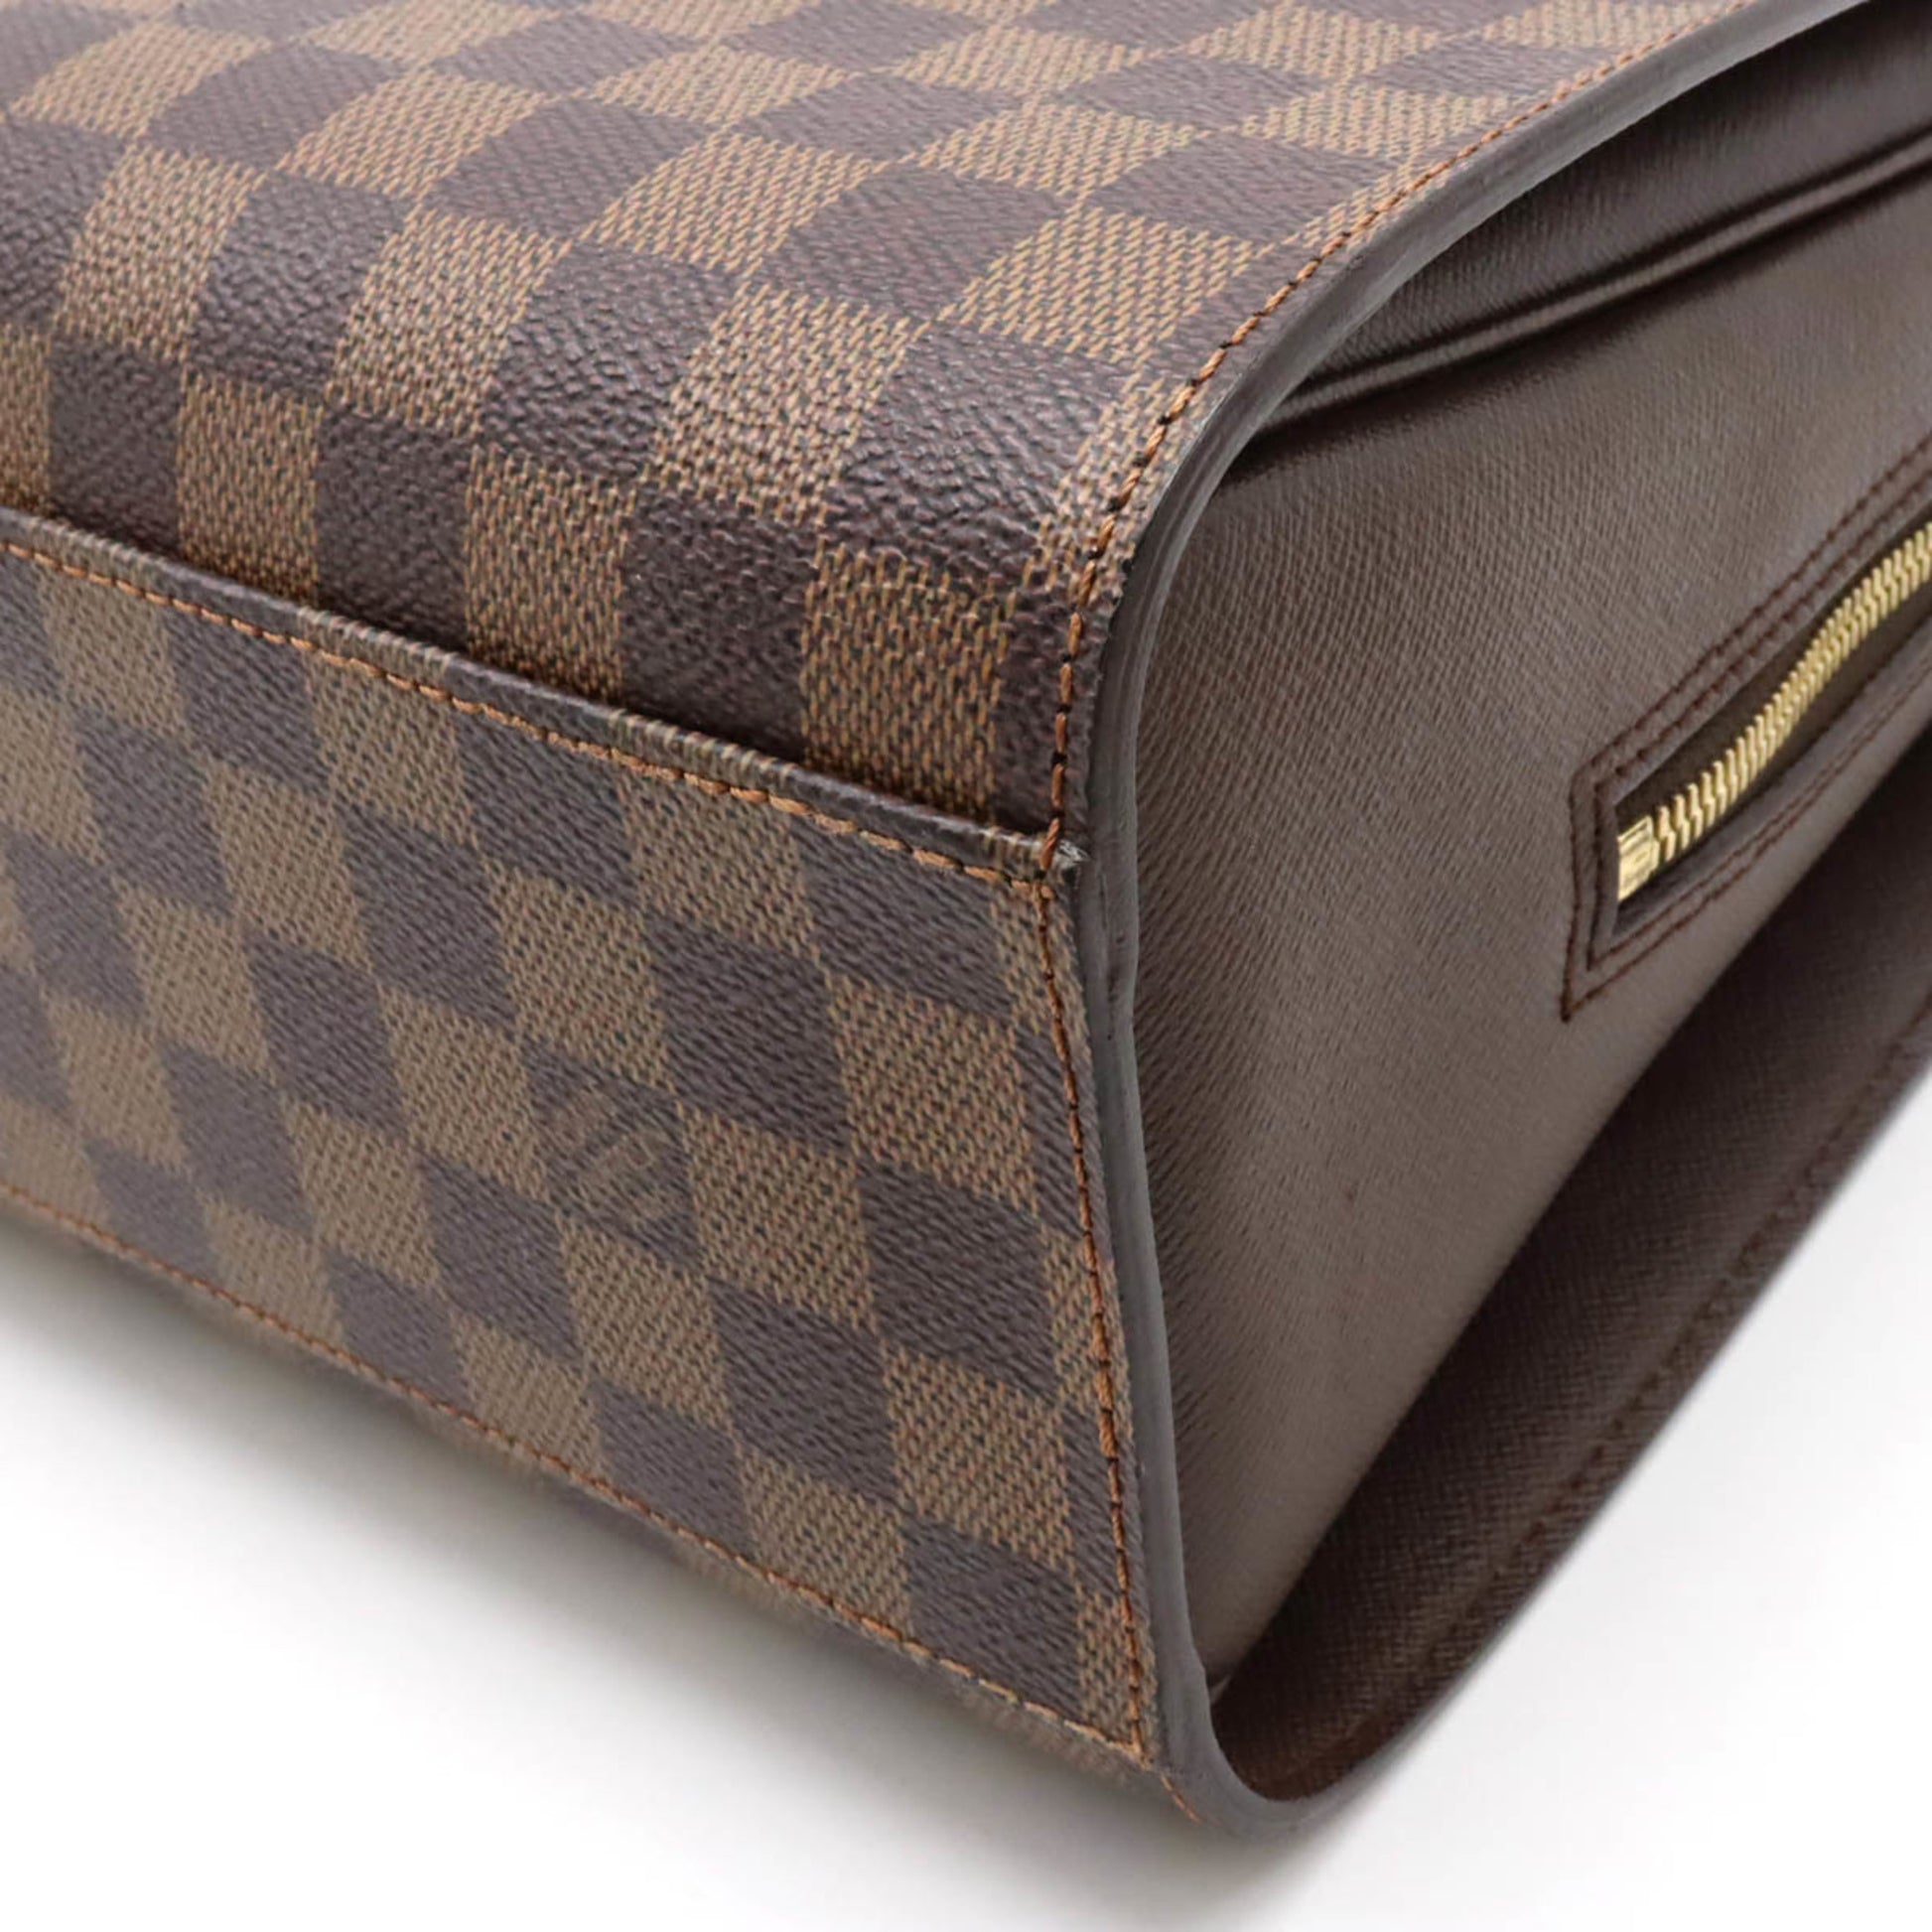 LOUIS VUITTON Louis Vuitton Damier Triana handbag square type N51155